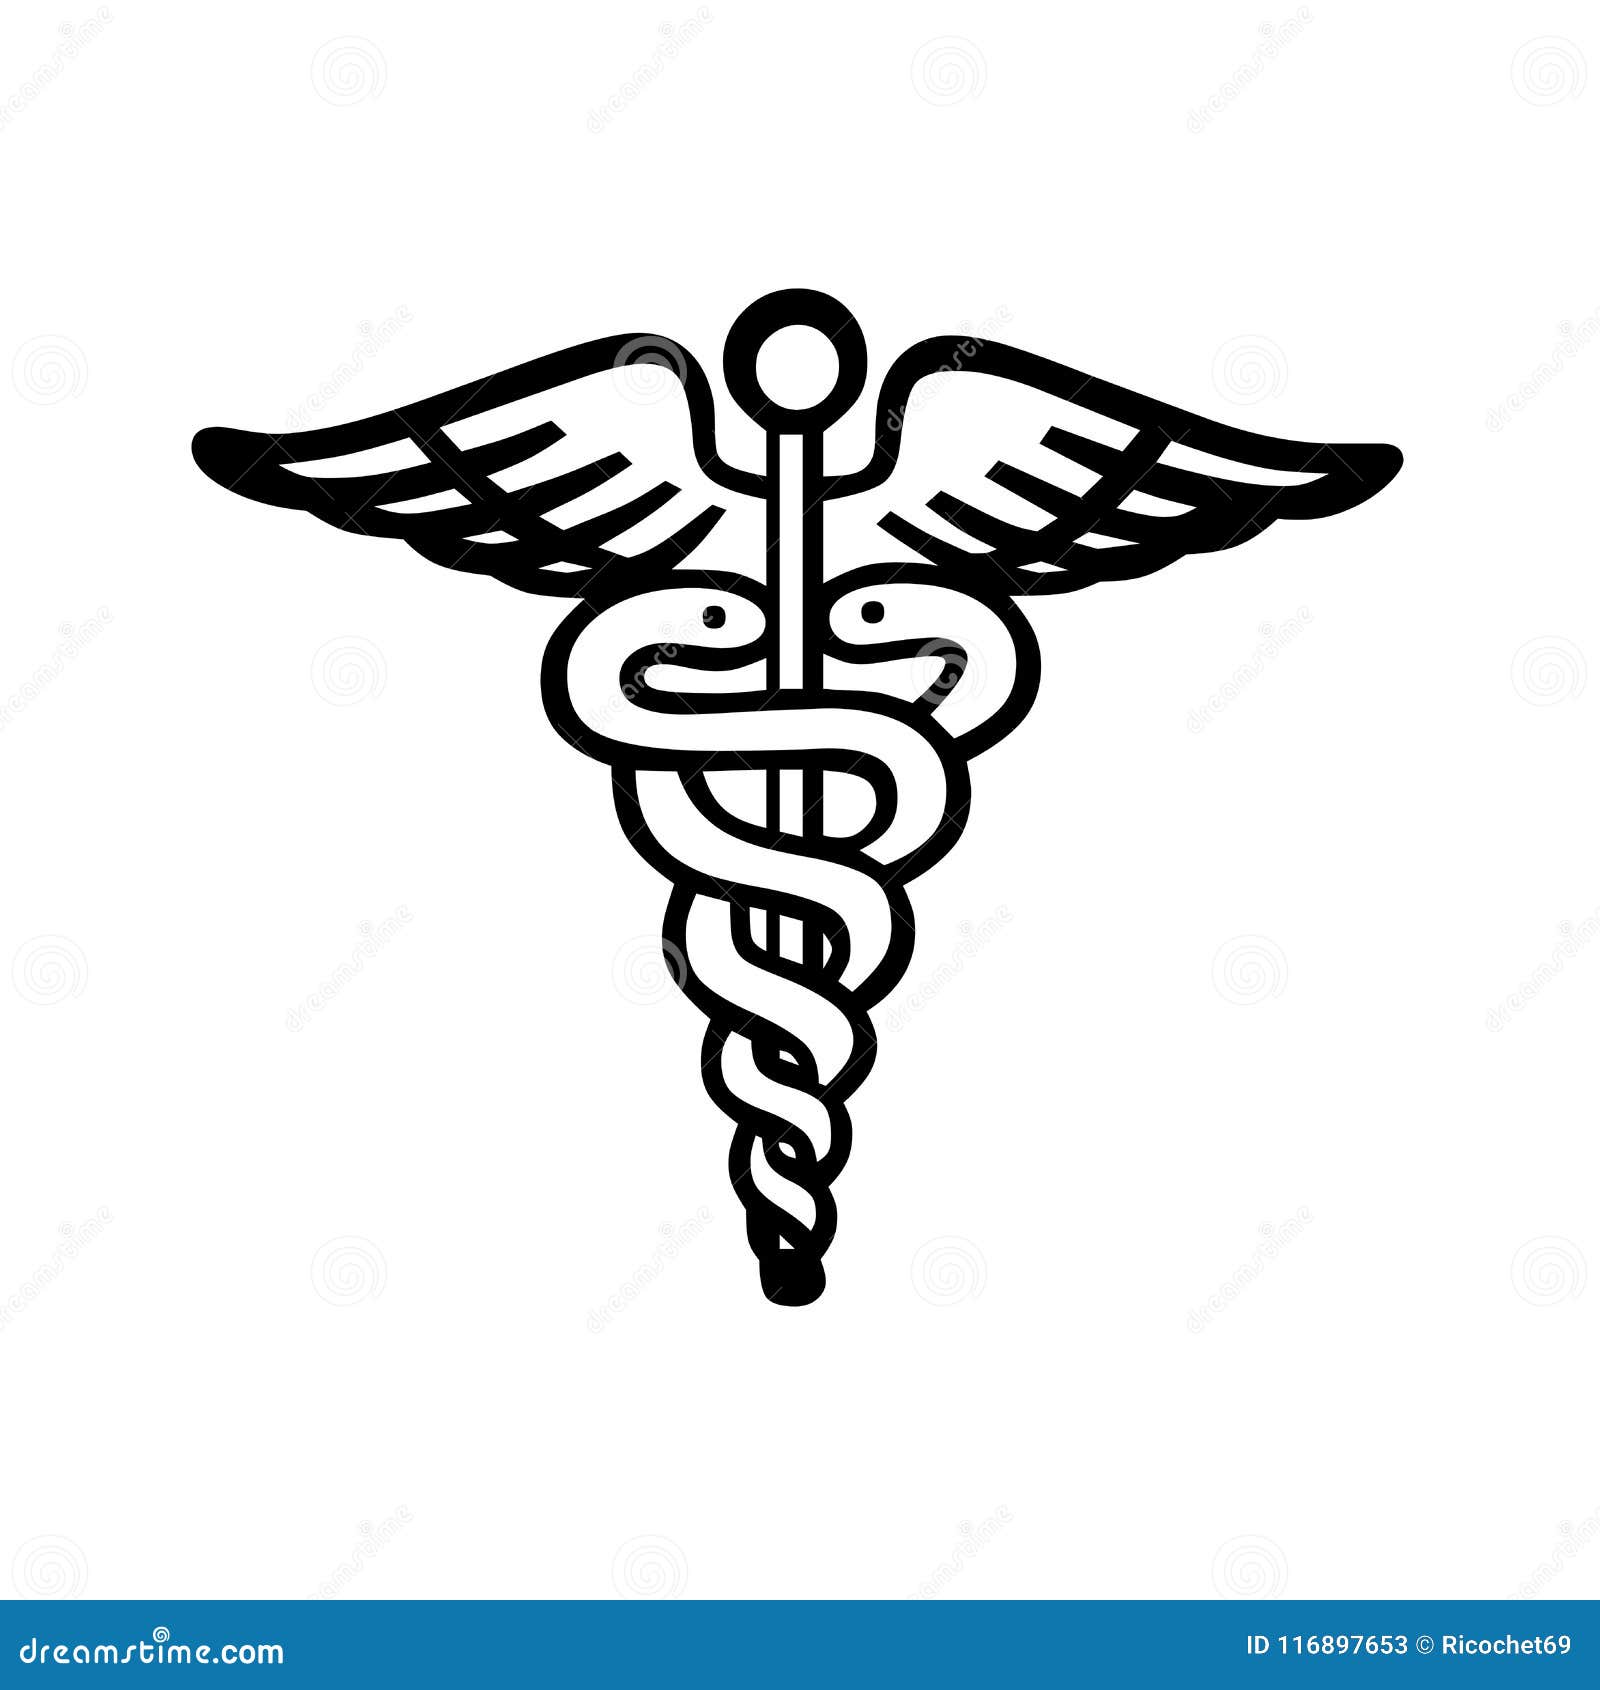 Caduceus medical symbol stock illustration. Illustration of drugstore ...